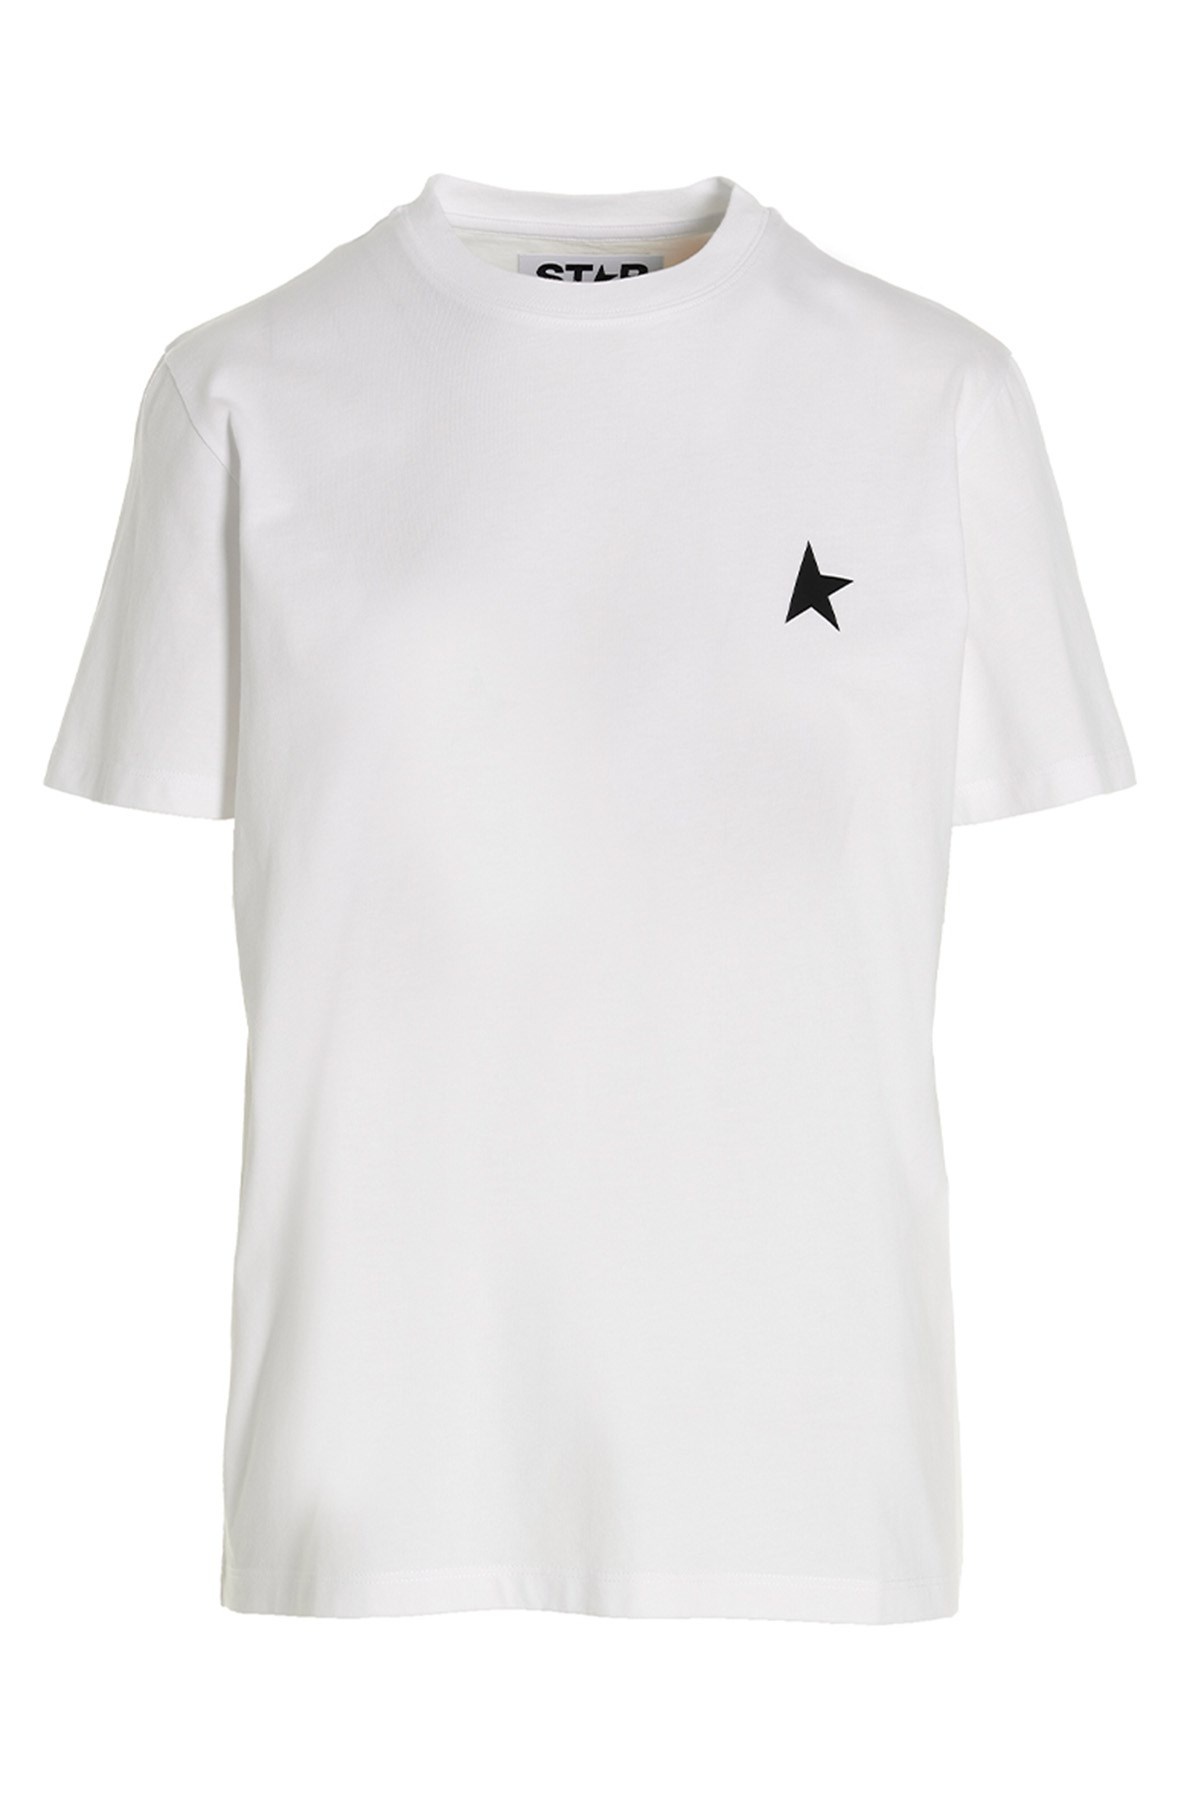 'Star' T-shirt - 1